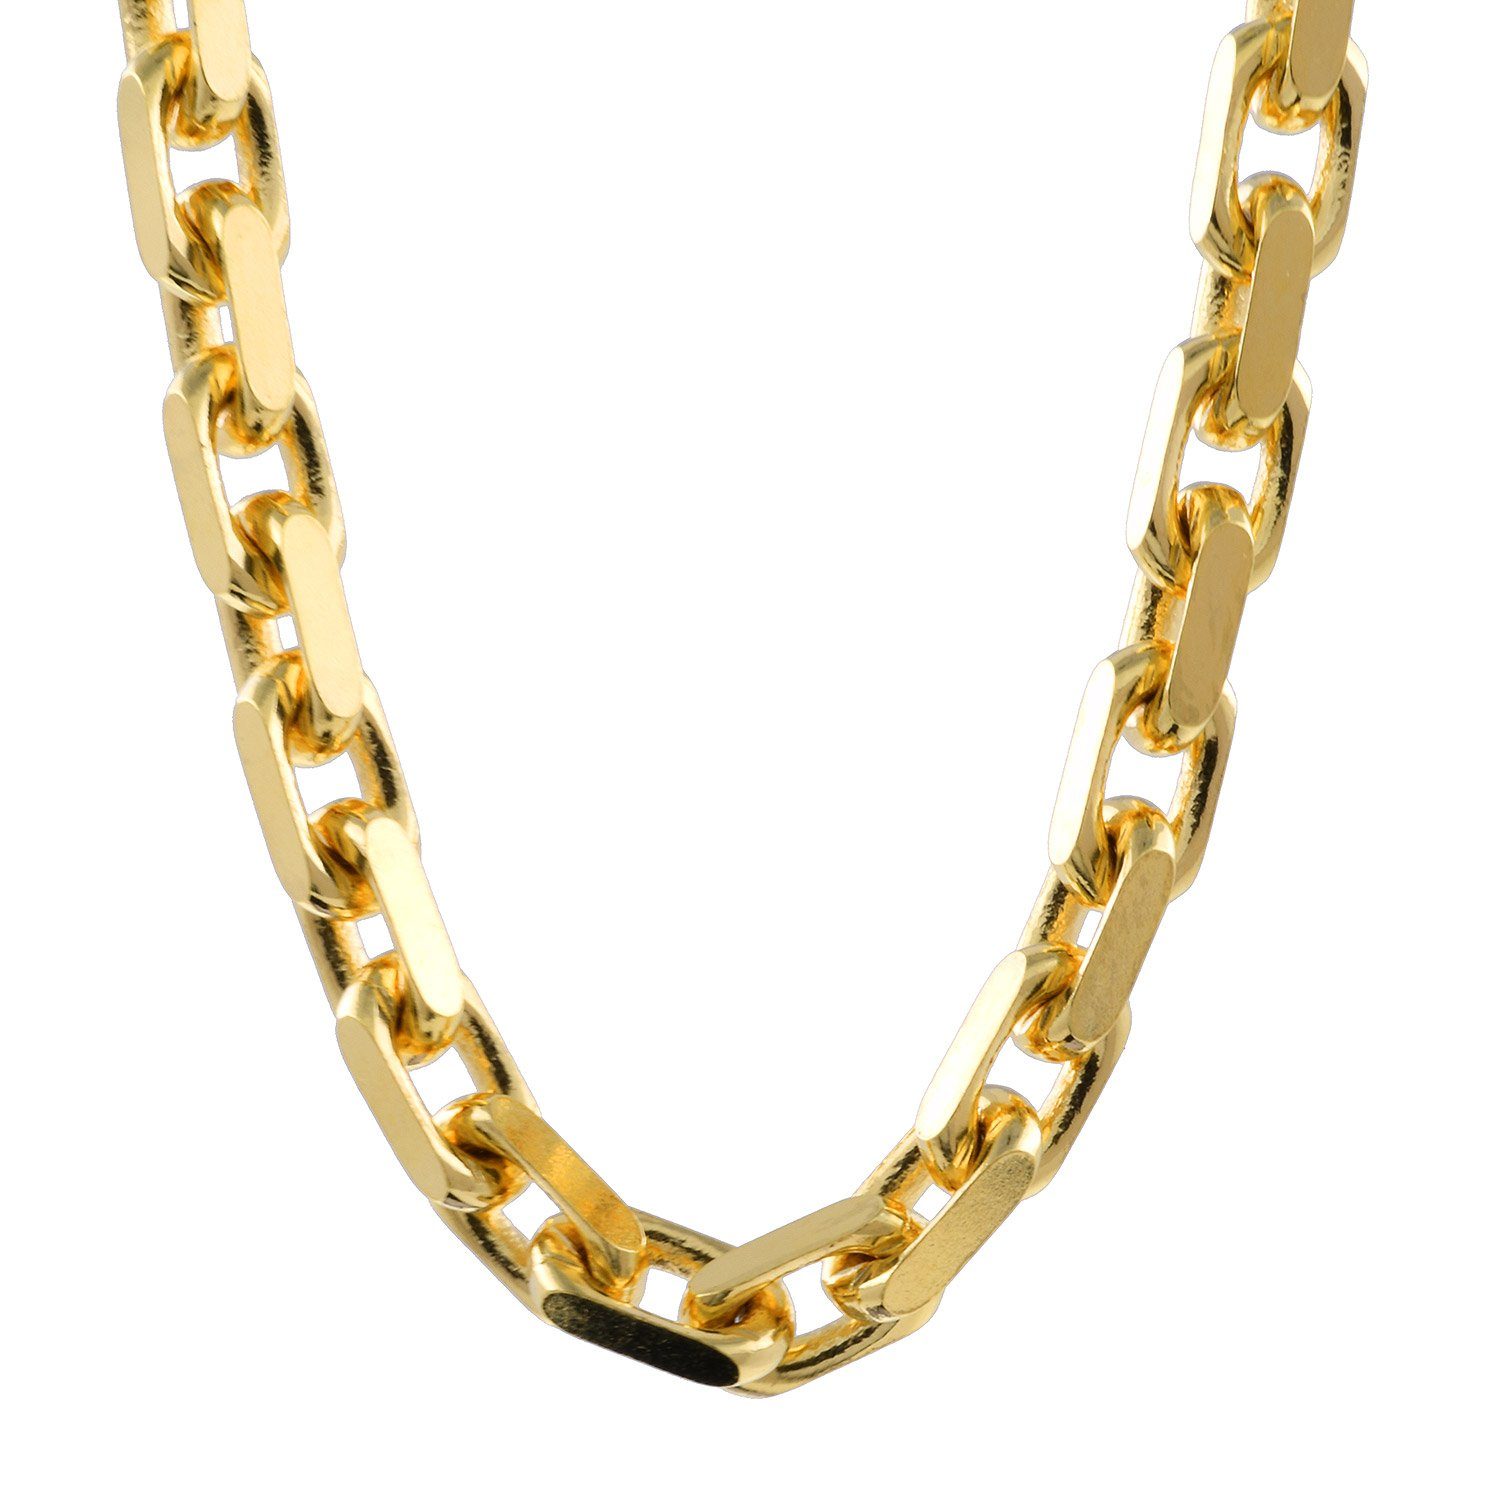 HOPLO Goldkette Ankerkette diamantiert 750 - 18 Karat Gold 5,0 mm  Kettenlänge 50 cm, Made in Germany